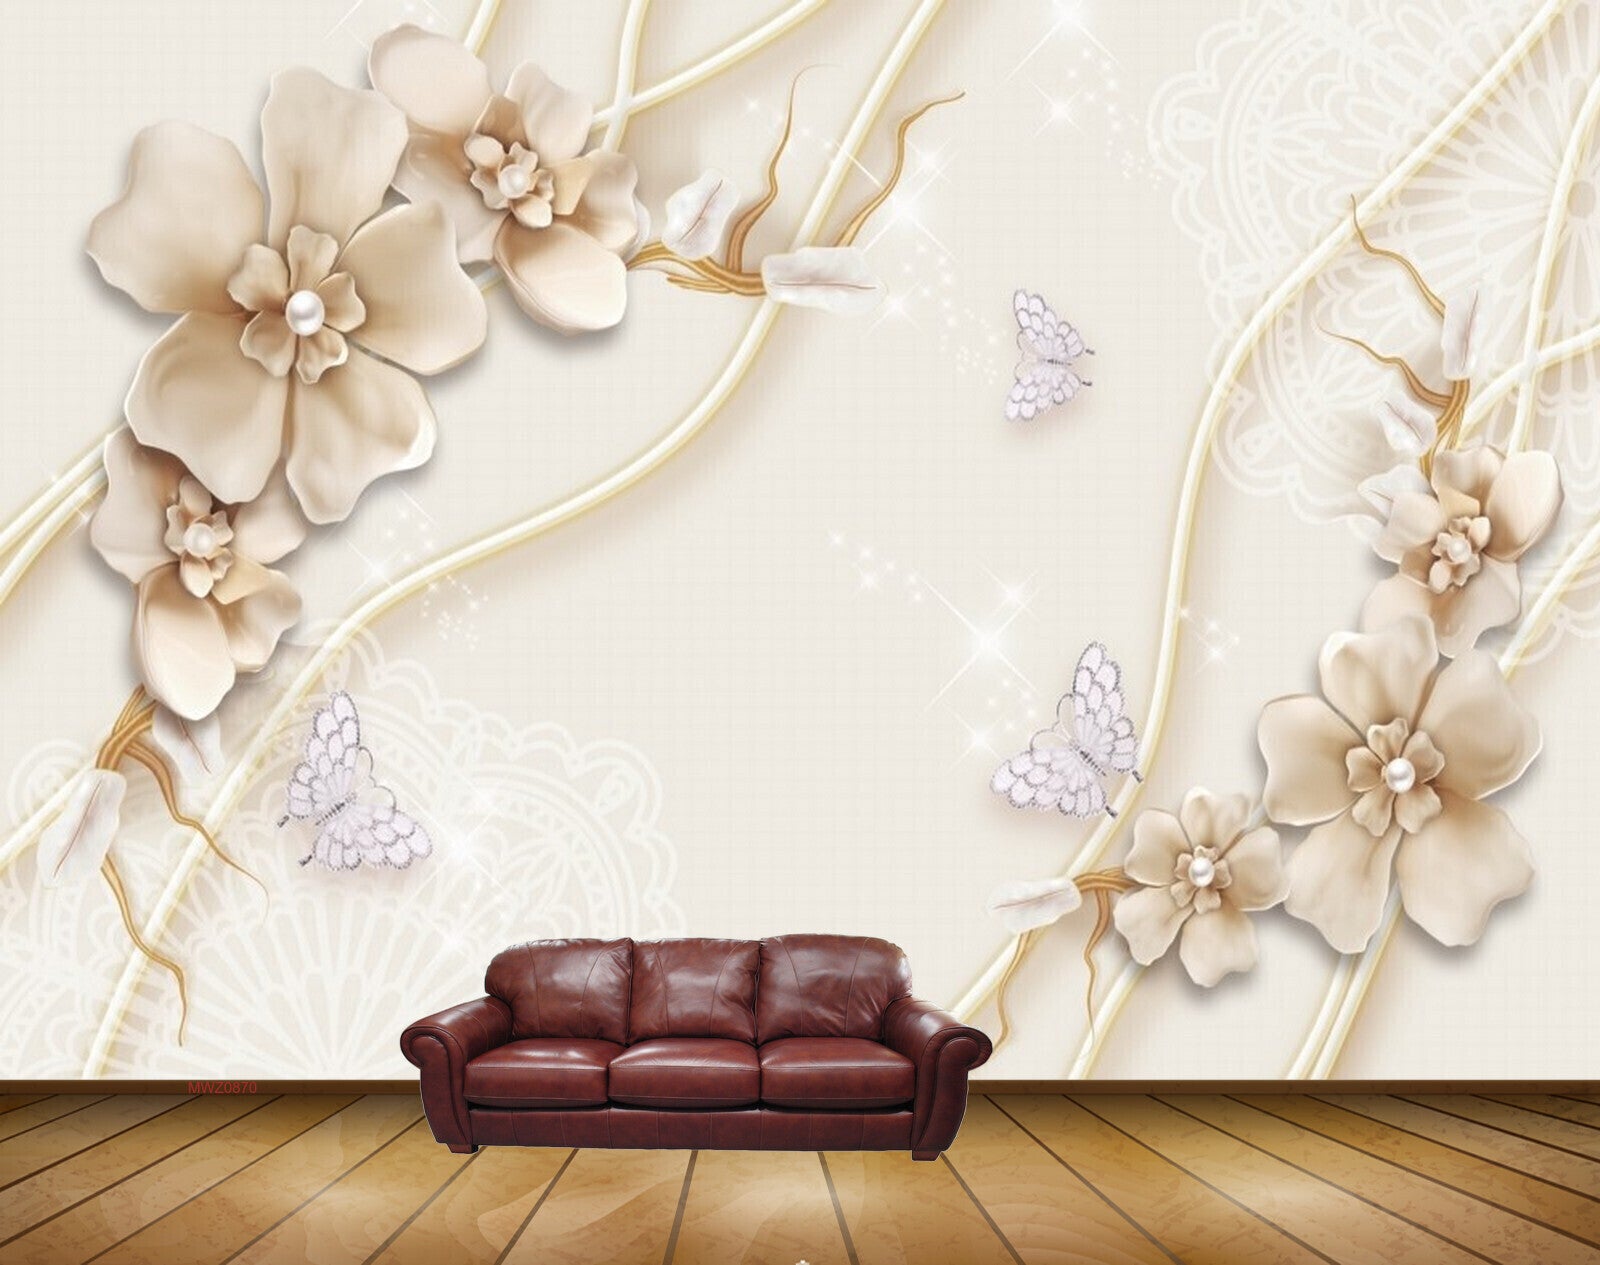 Free and customizable summer desktop wallpaper templates | Canva